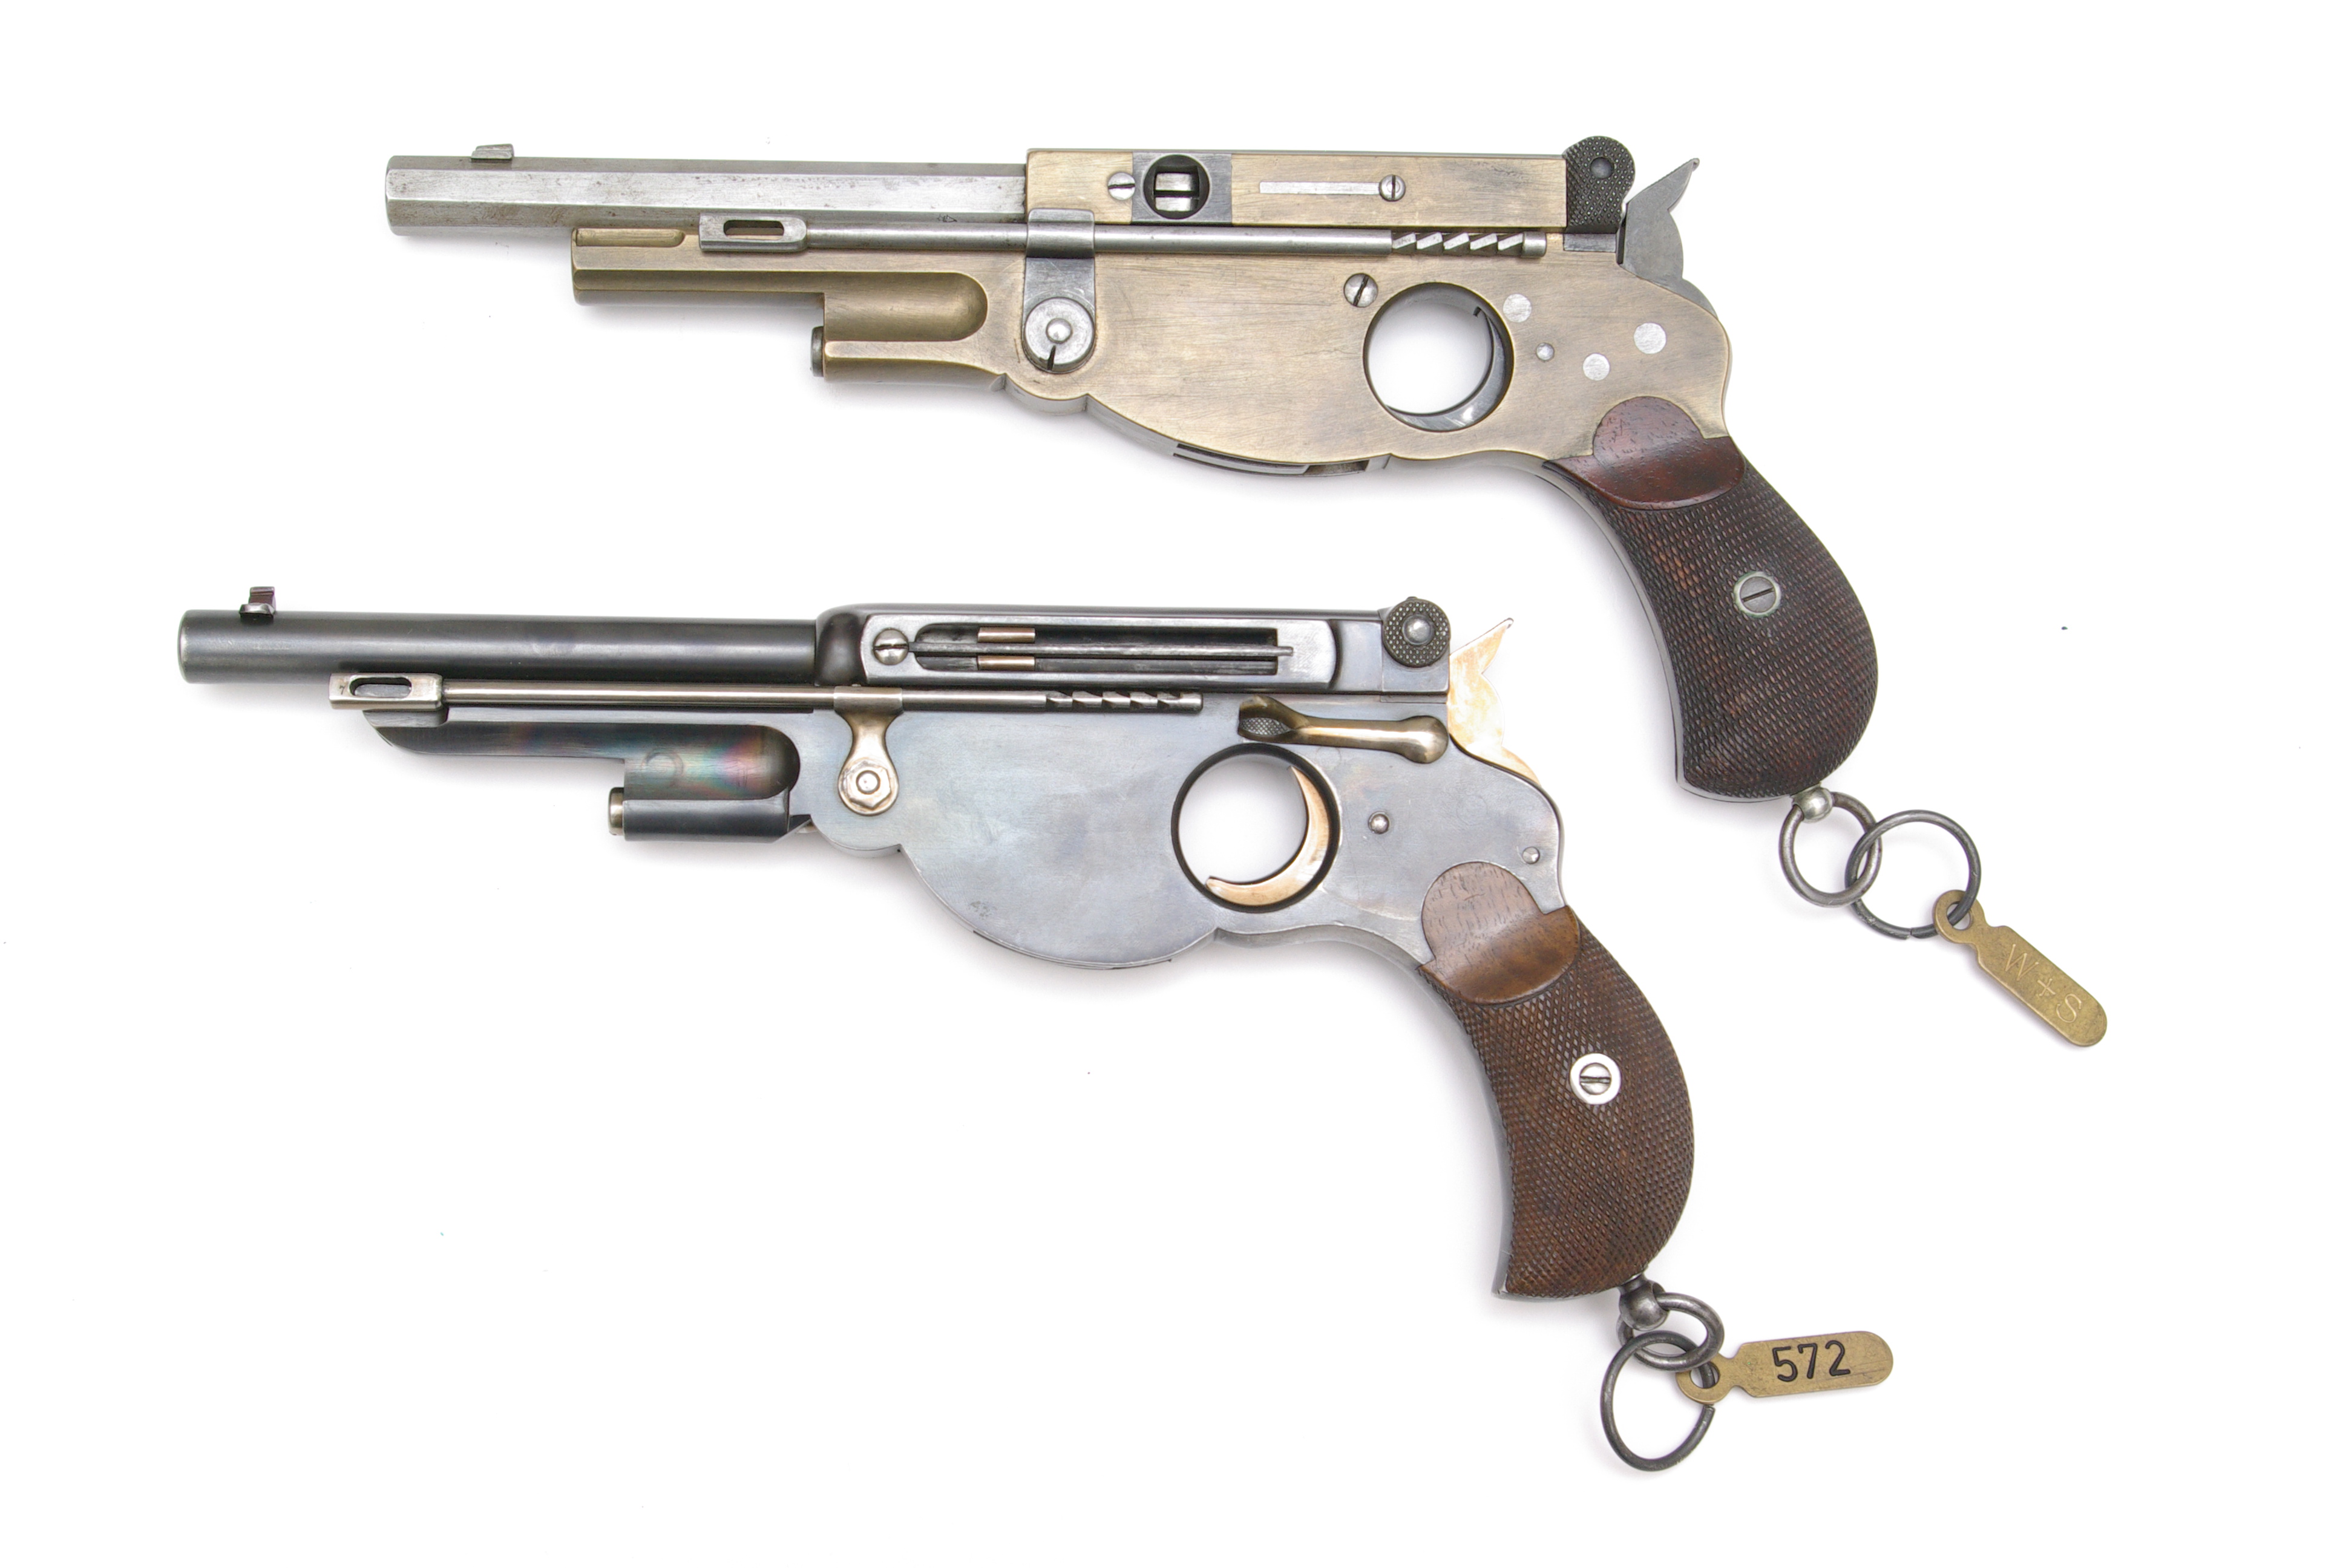 Winchester Model 1893 - C&Rsenal